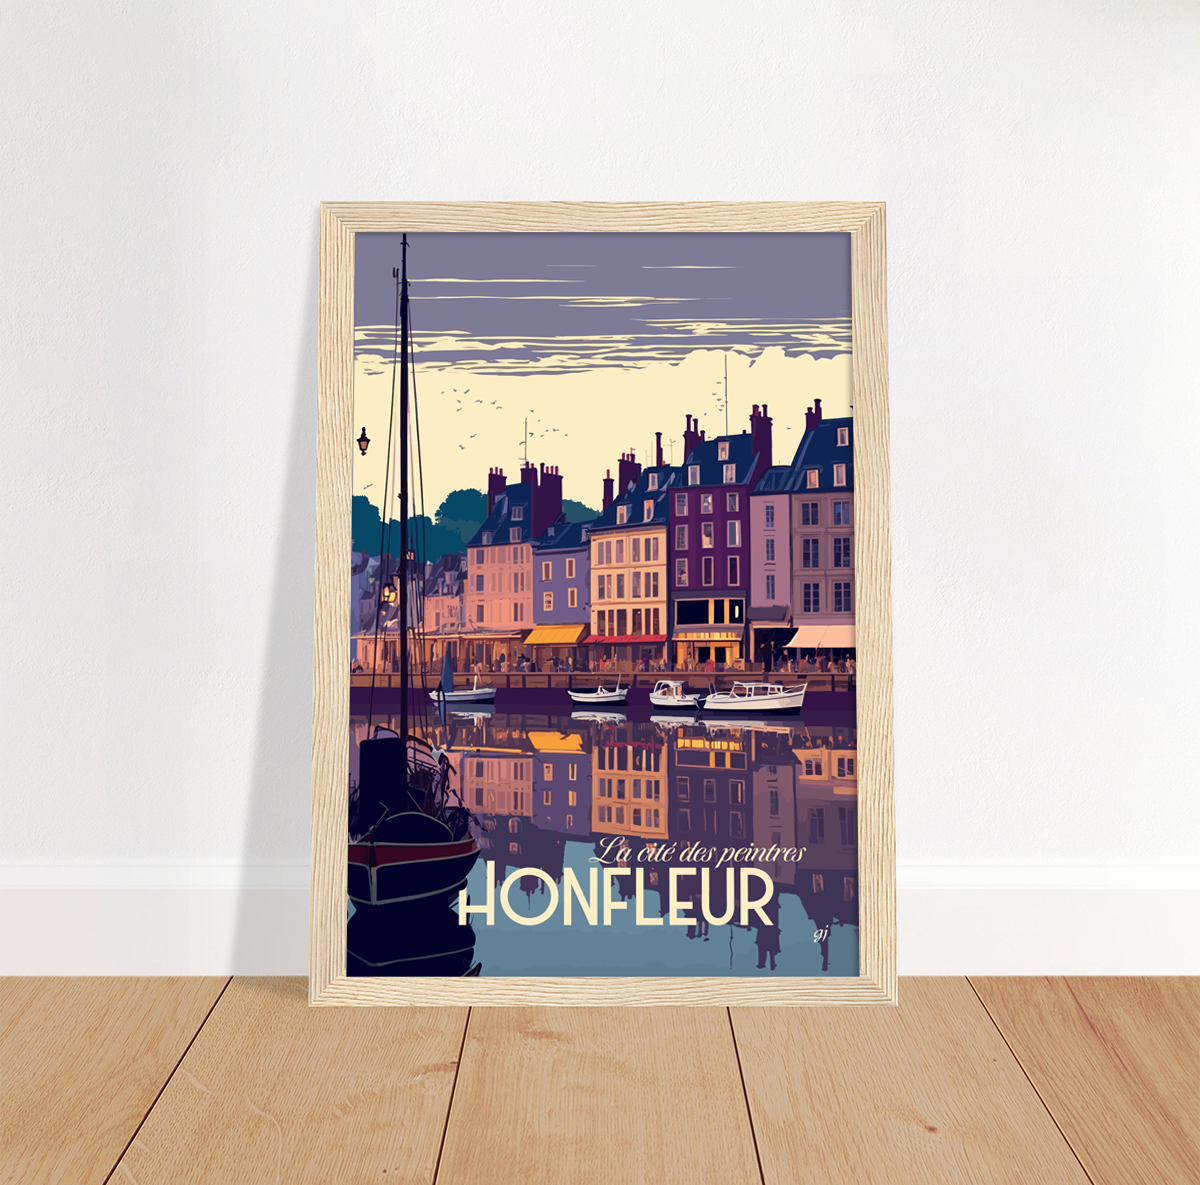 Honfleur poster by bon voyage design